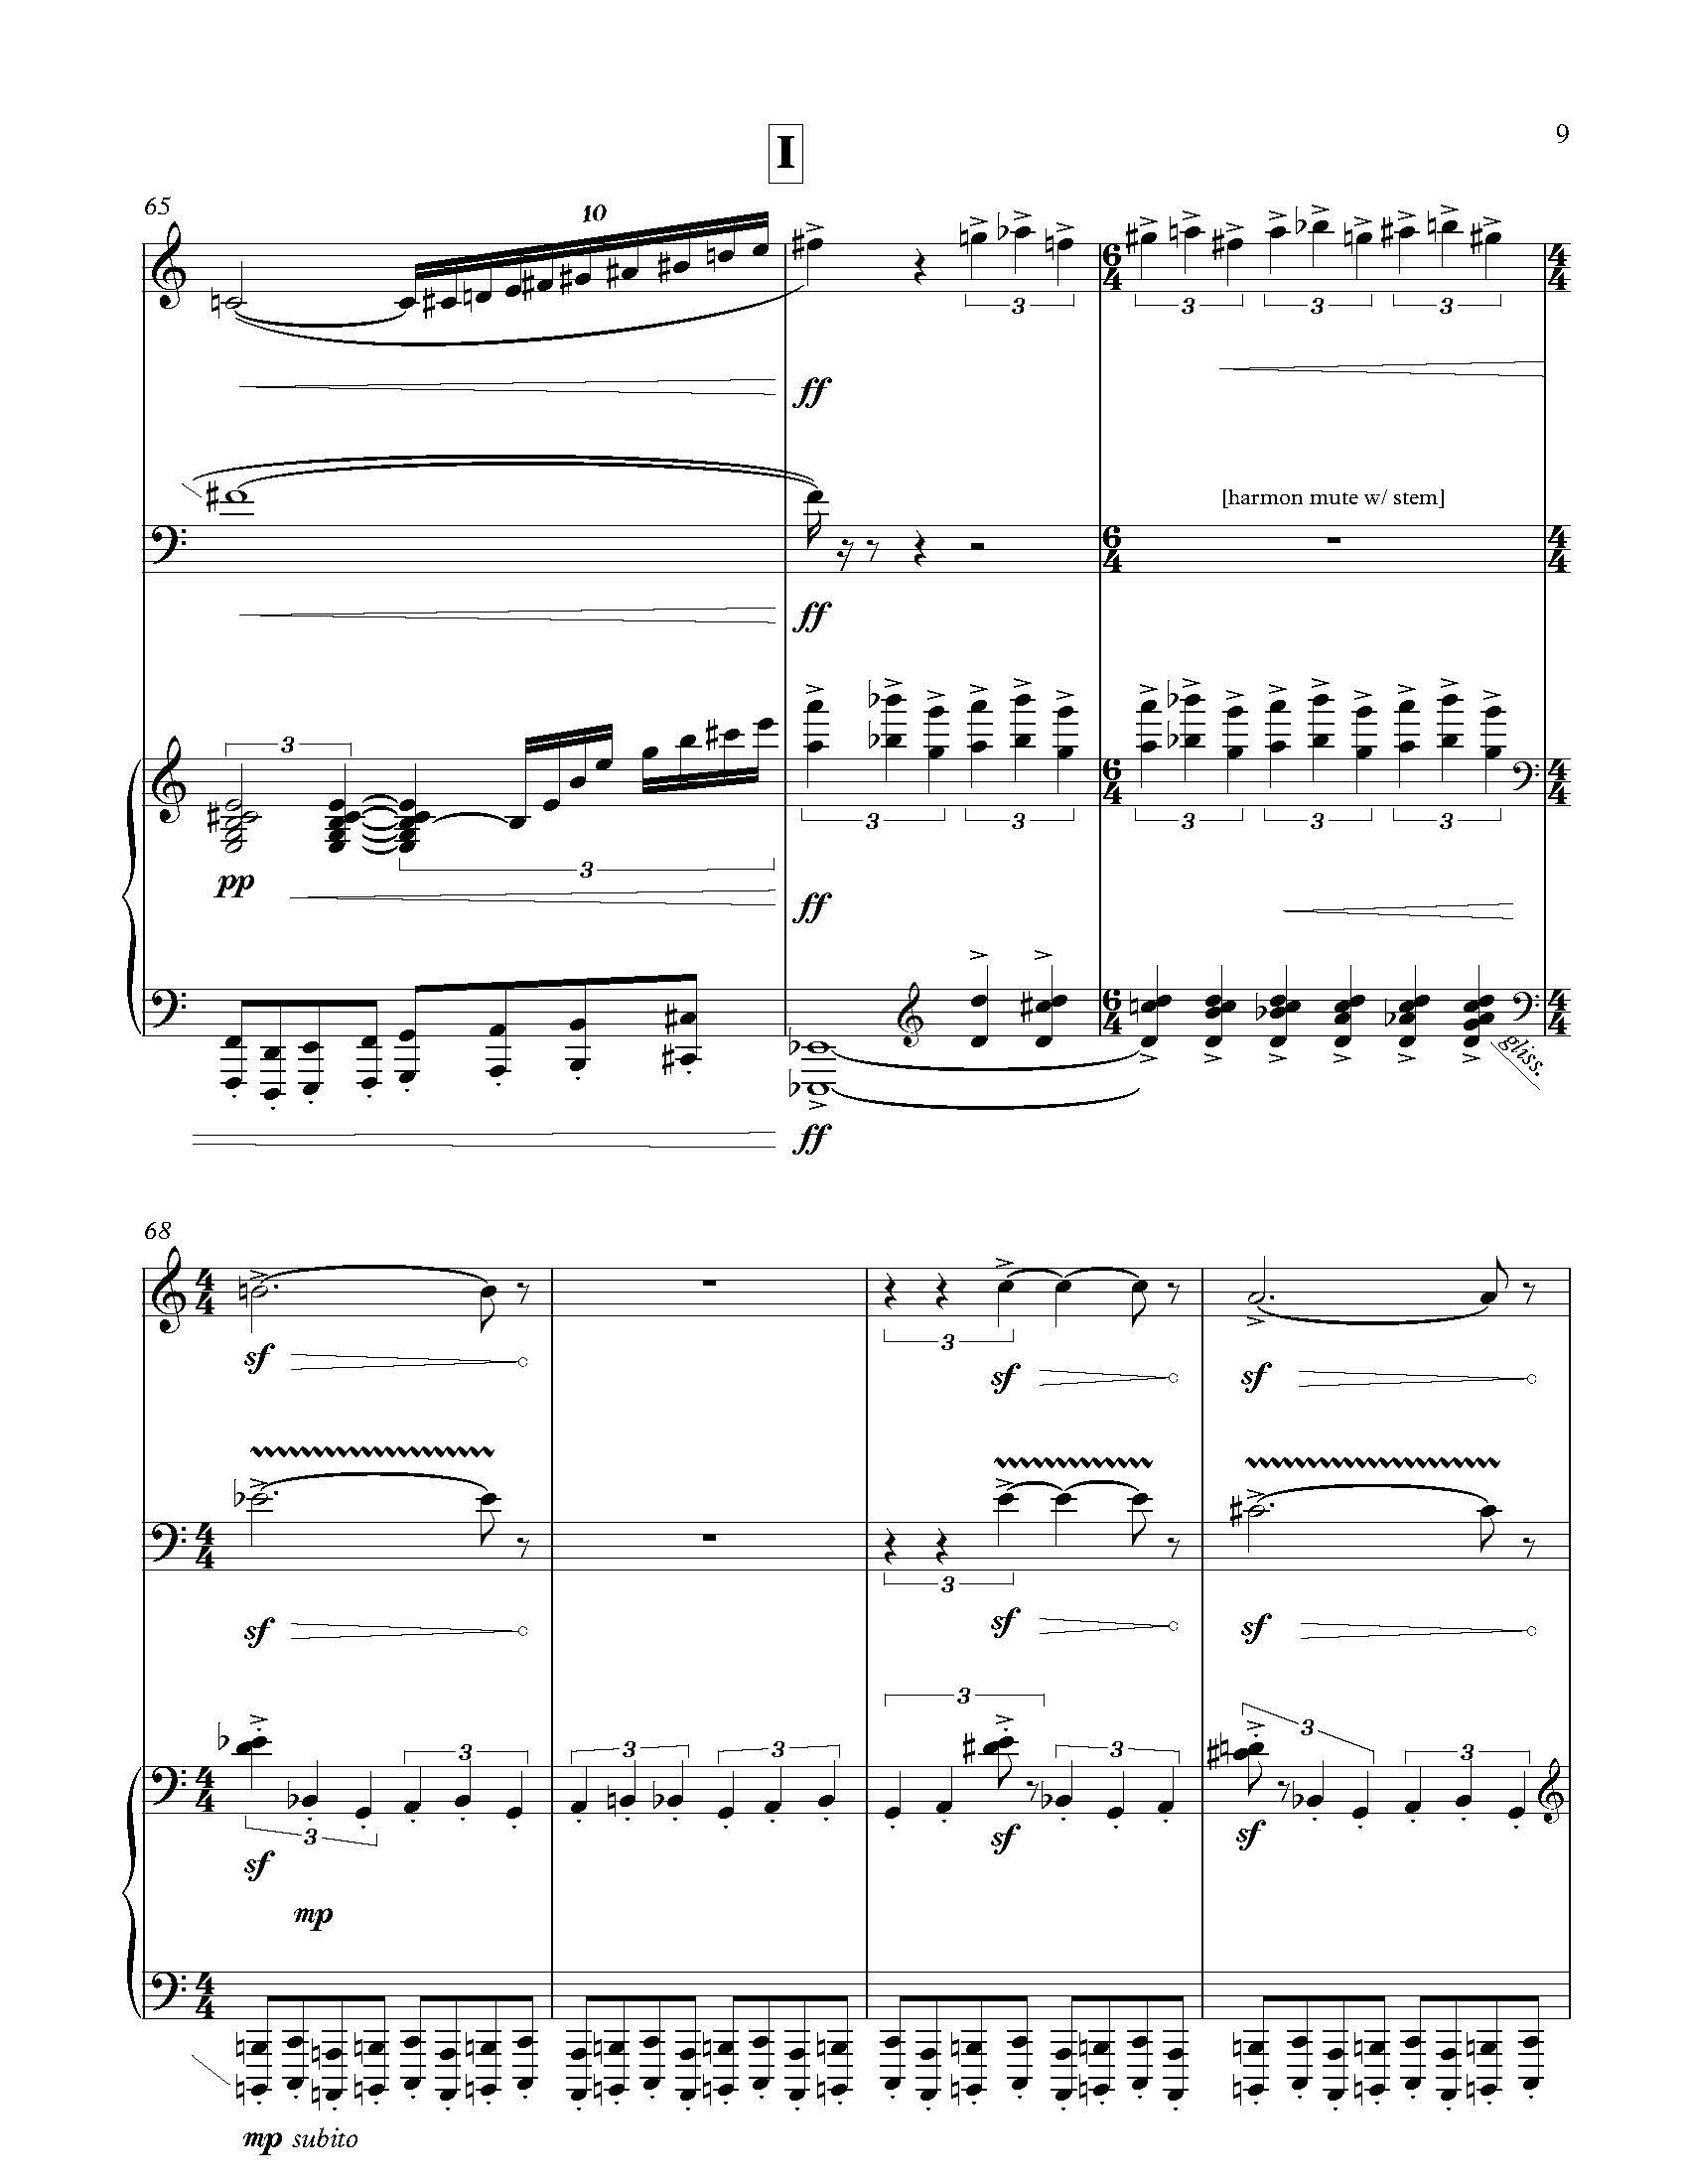 alice + zoltan 4ever - Complete Score_Page_15.jpg